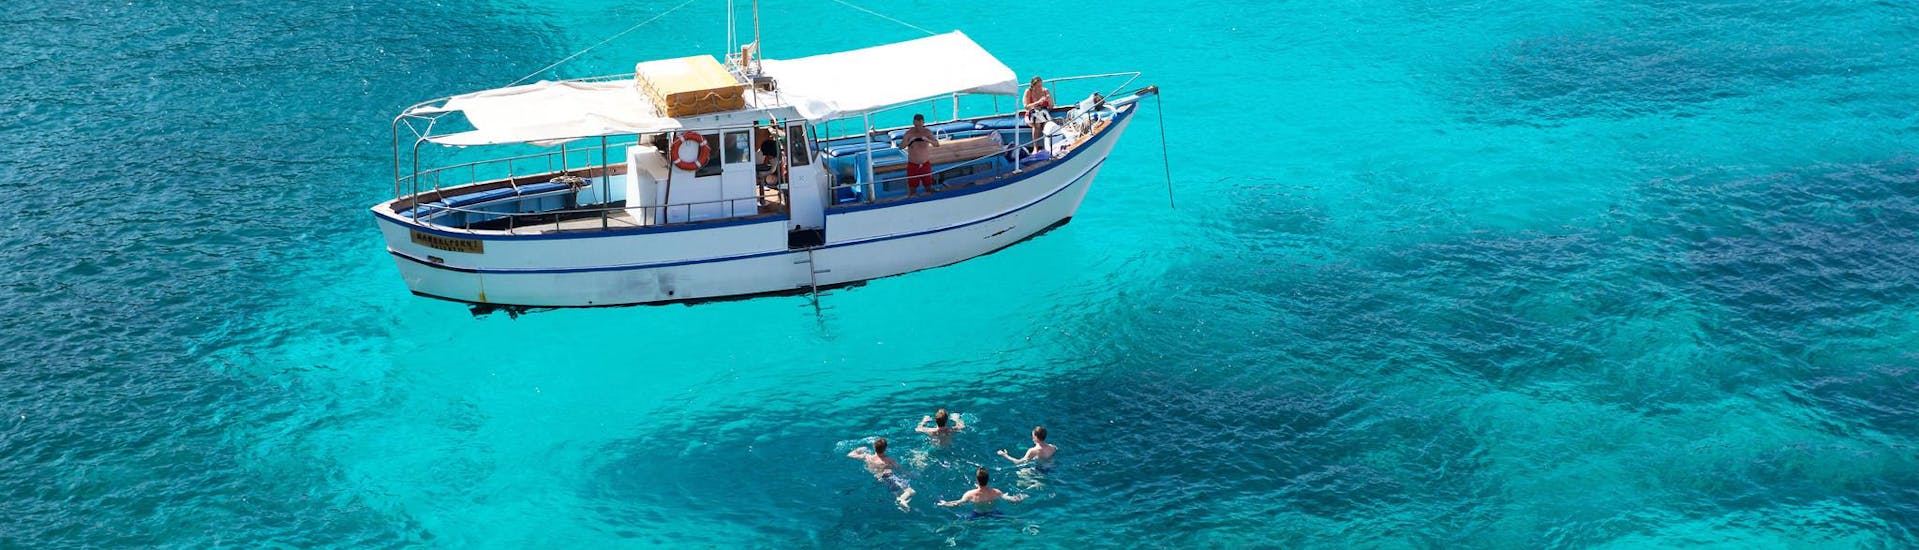 Gente divirtiéndose durante un paseo en barco con paradas para nadar.